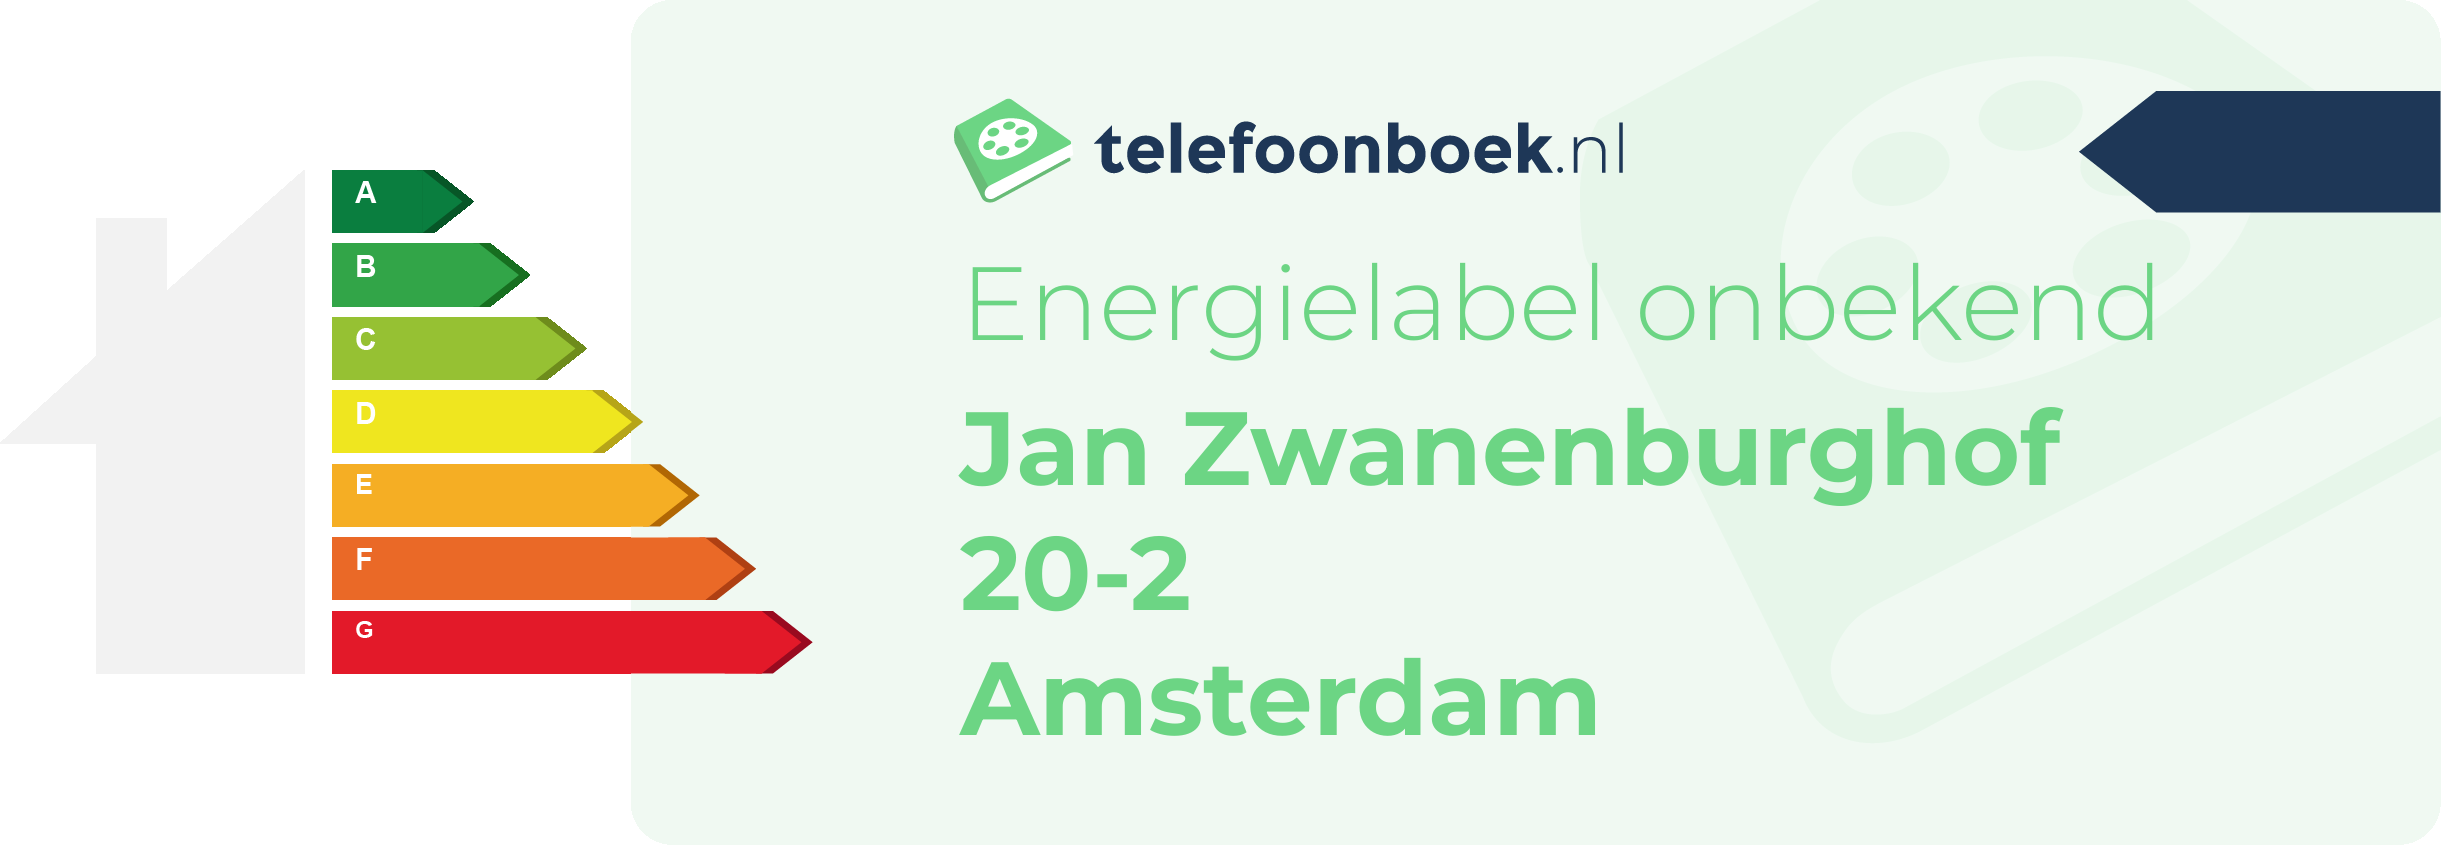 Energielabel Jan Zwanenburghof 20-2 Amsterdam